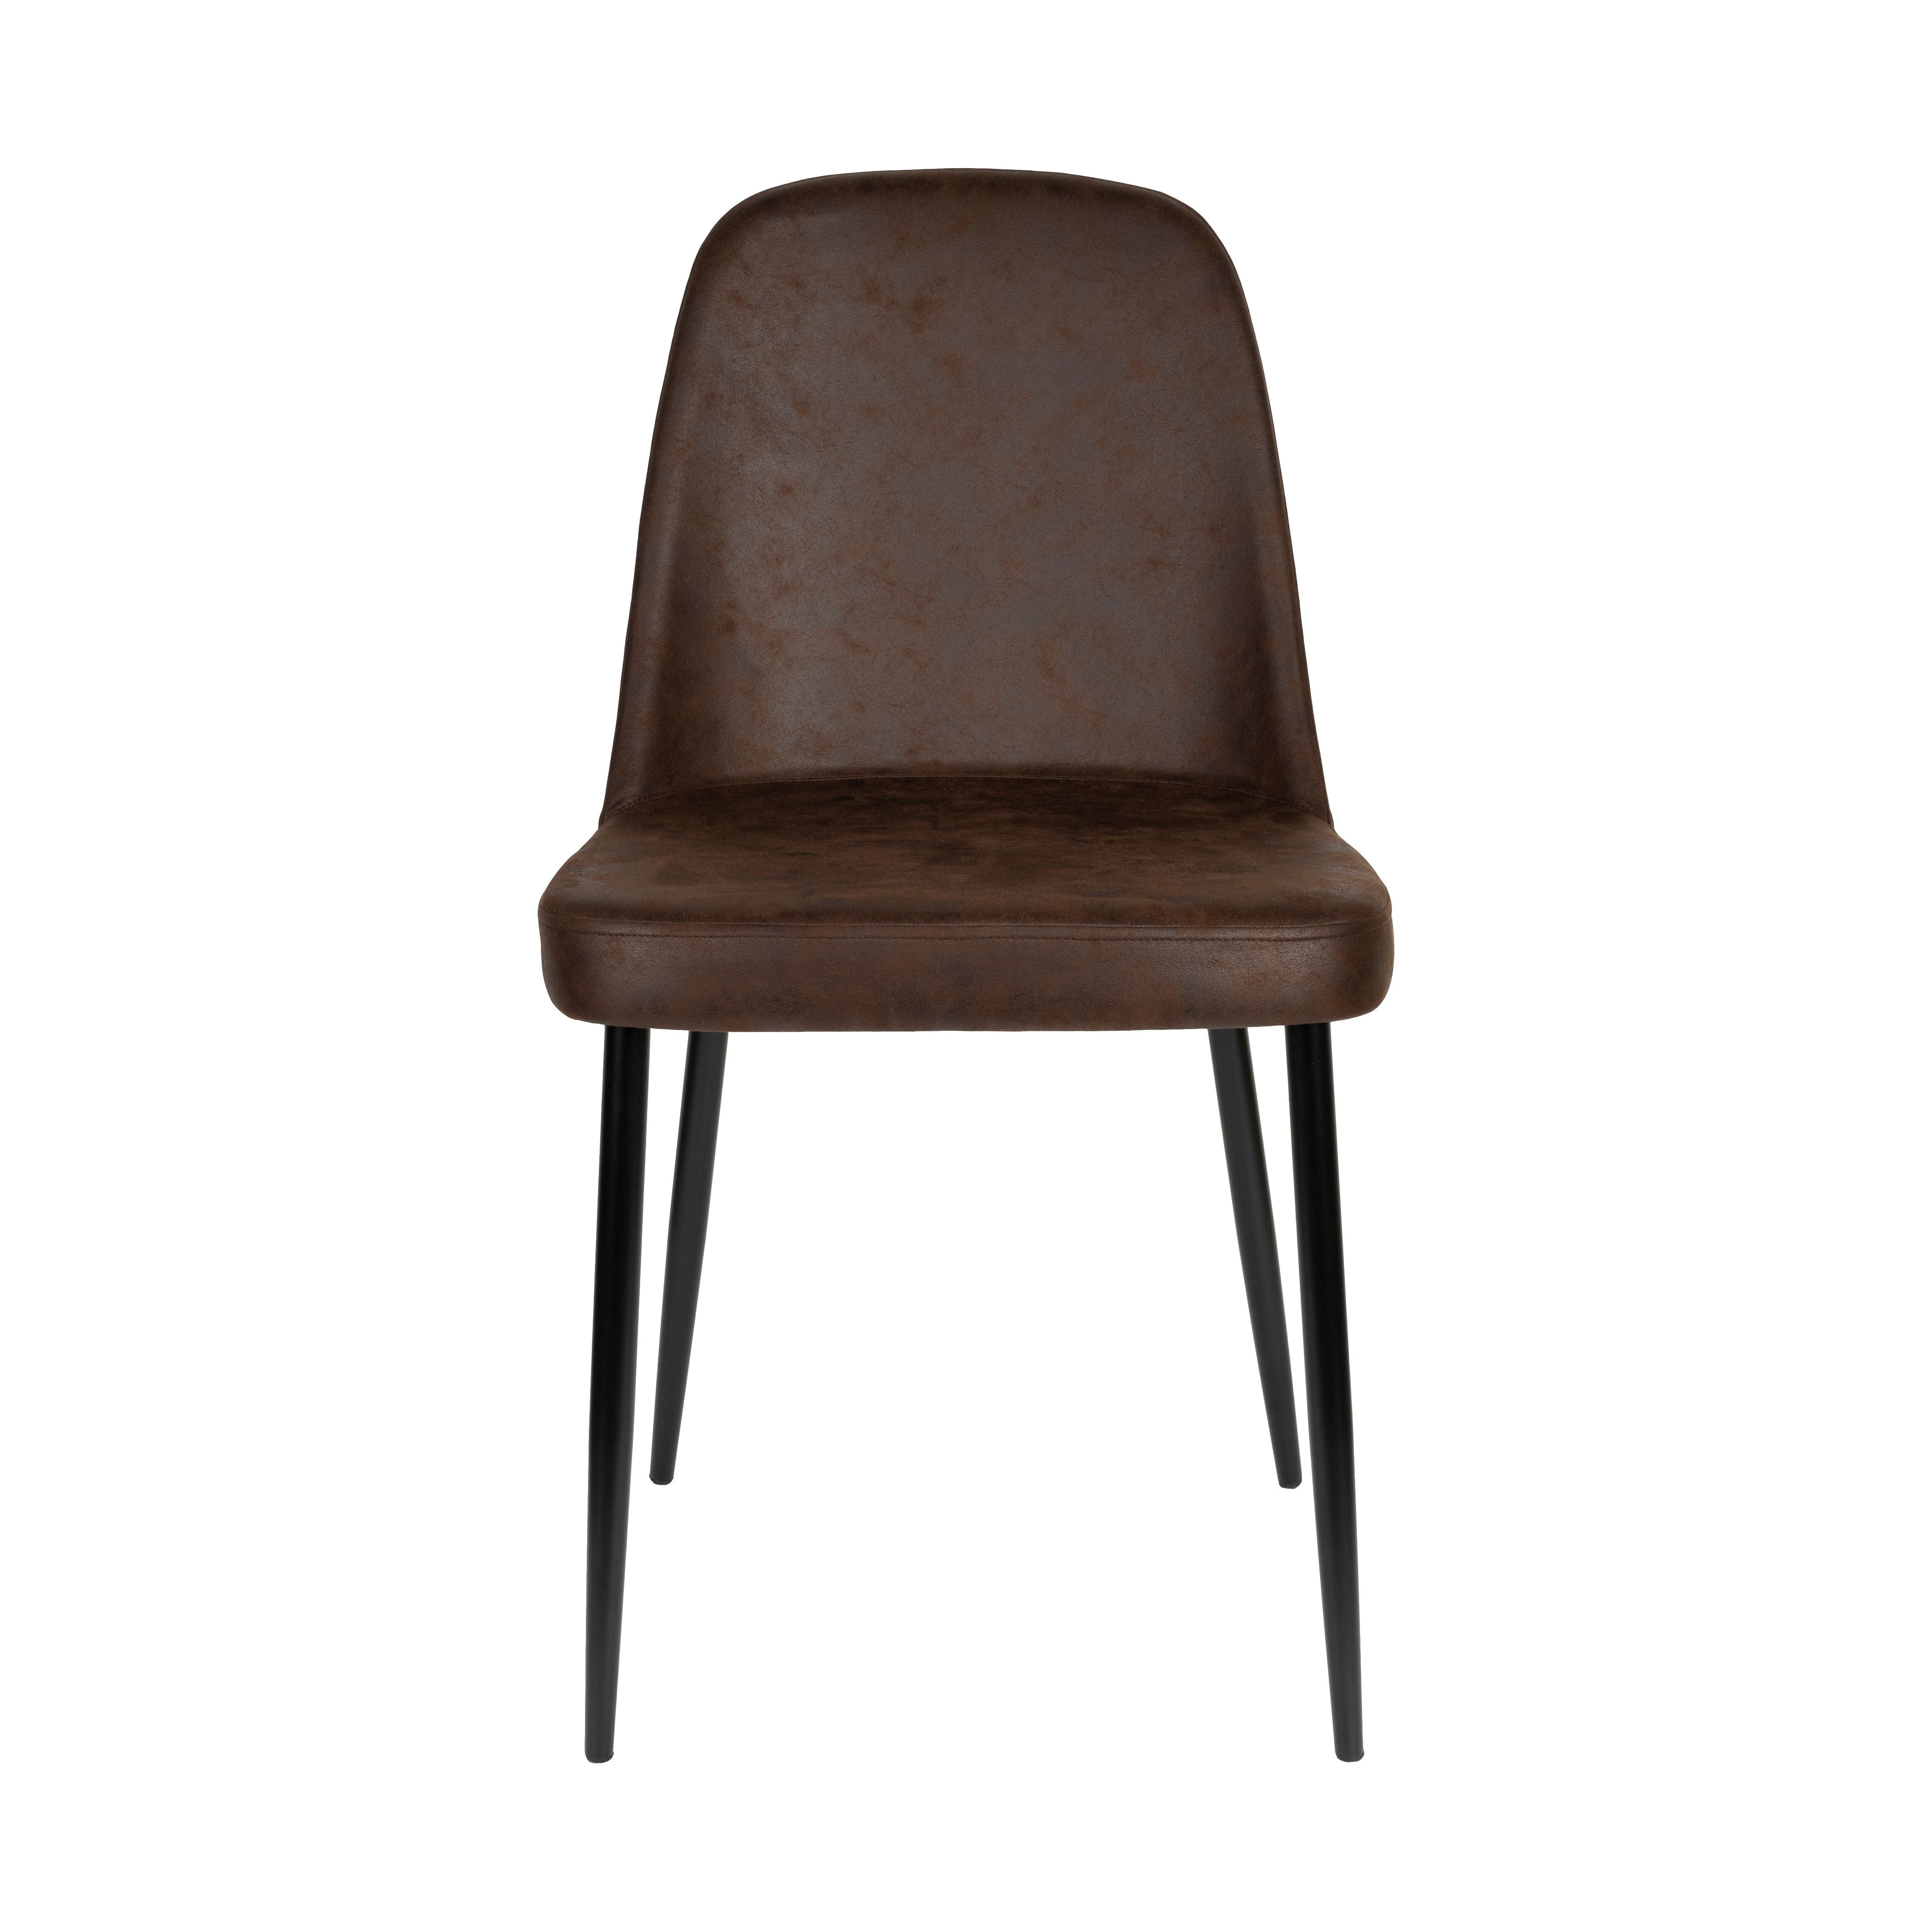 Chair alana brown | 2 pieces